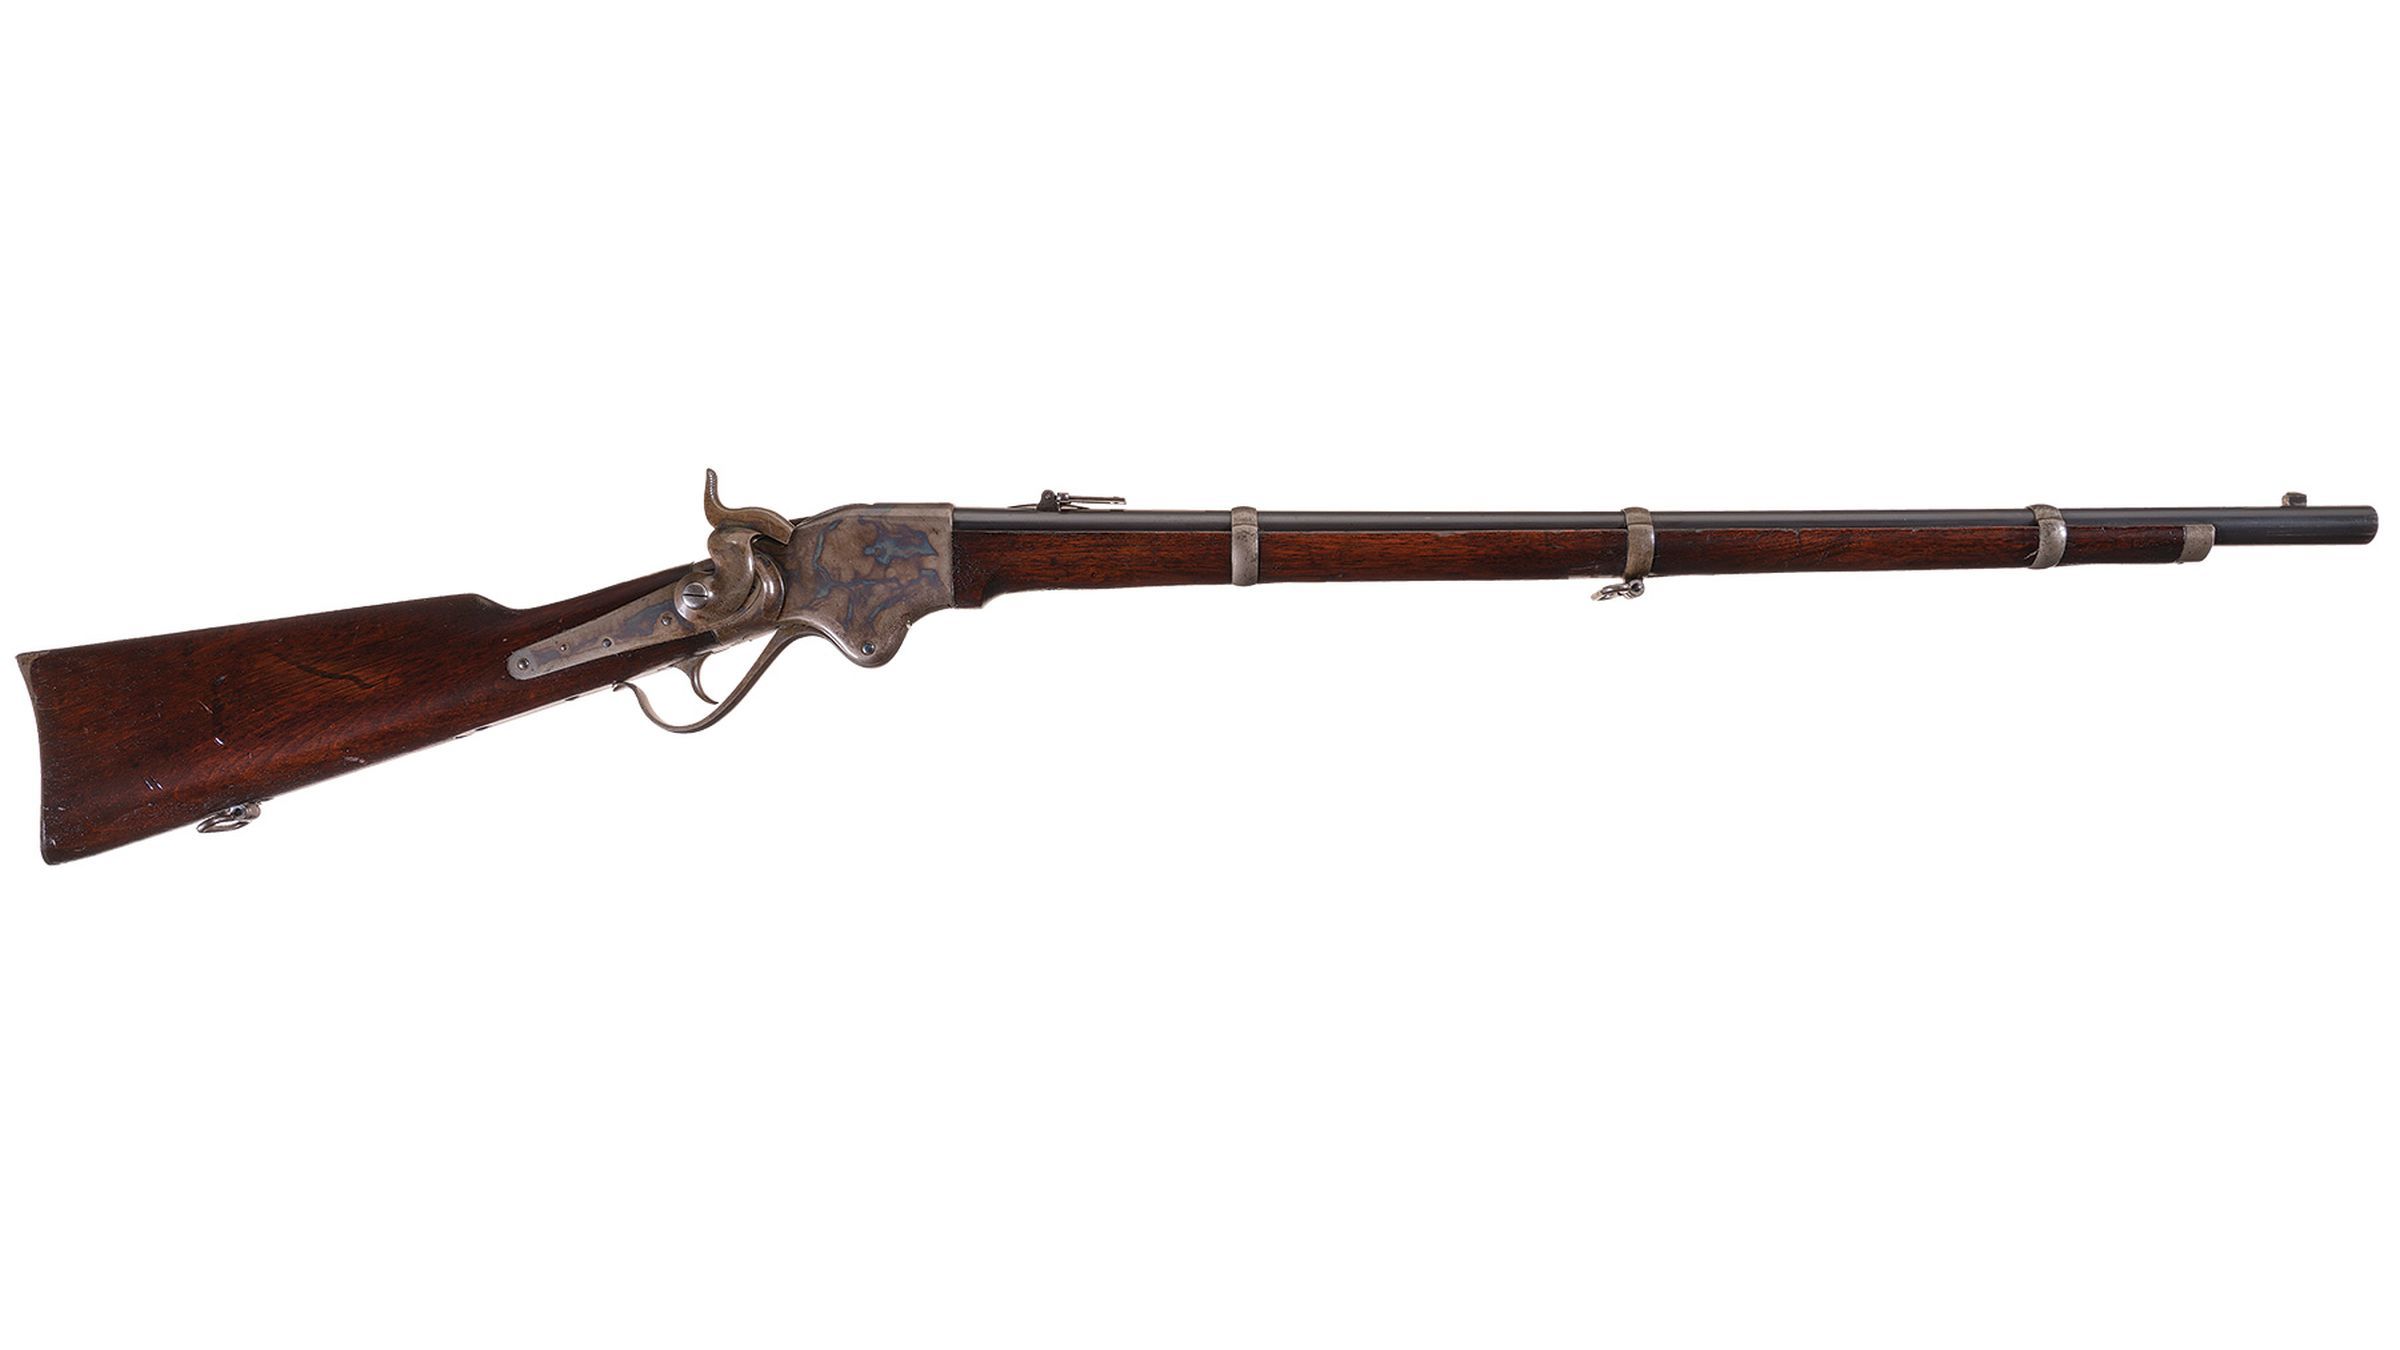 1 Original Spencer Rifle or Carbine Rear Sight Base 